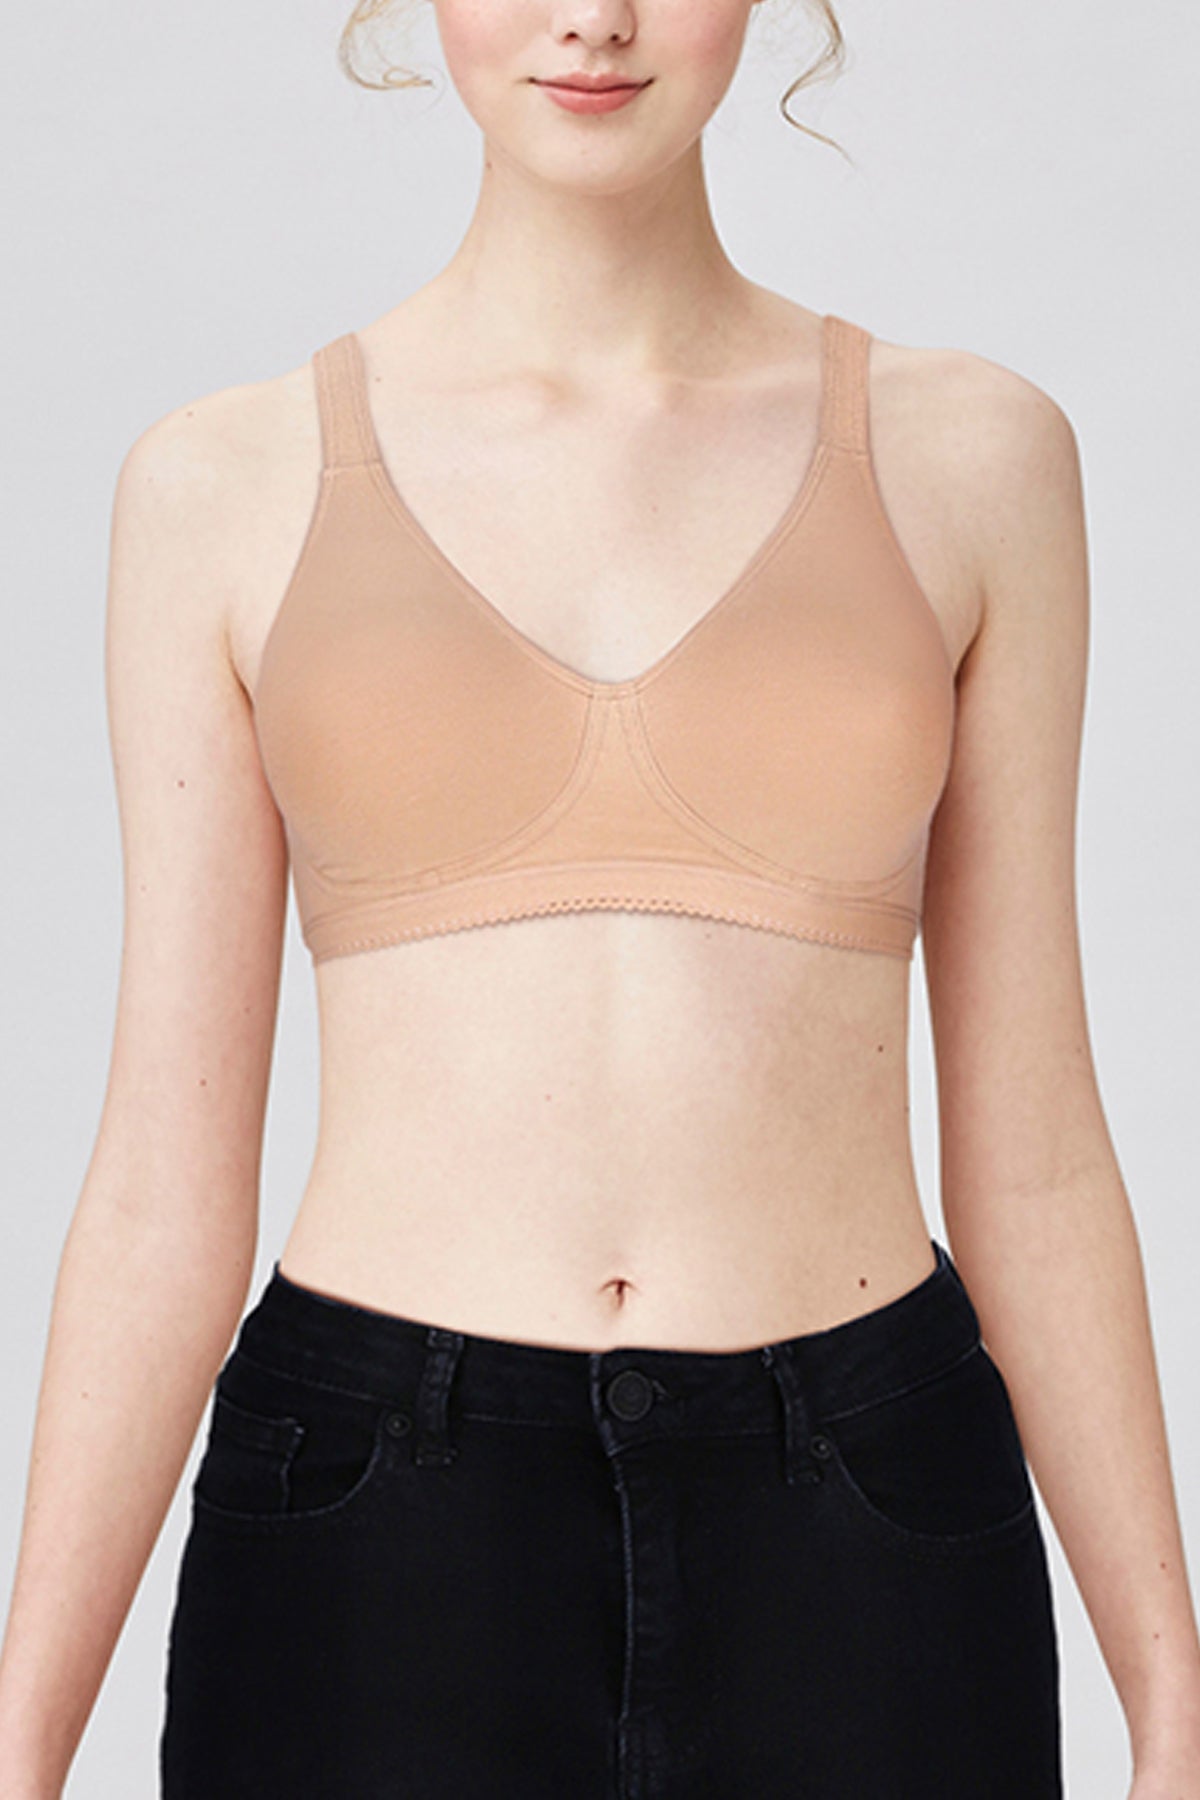 LooksOMG's Cotton Regular bra in Skin Color